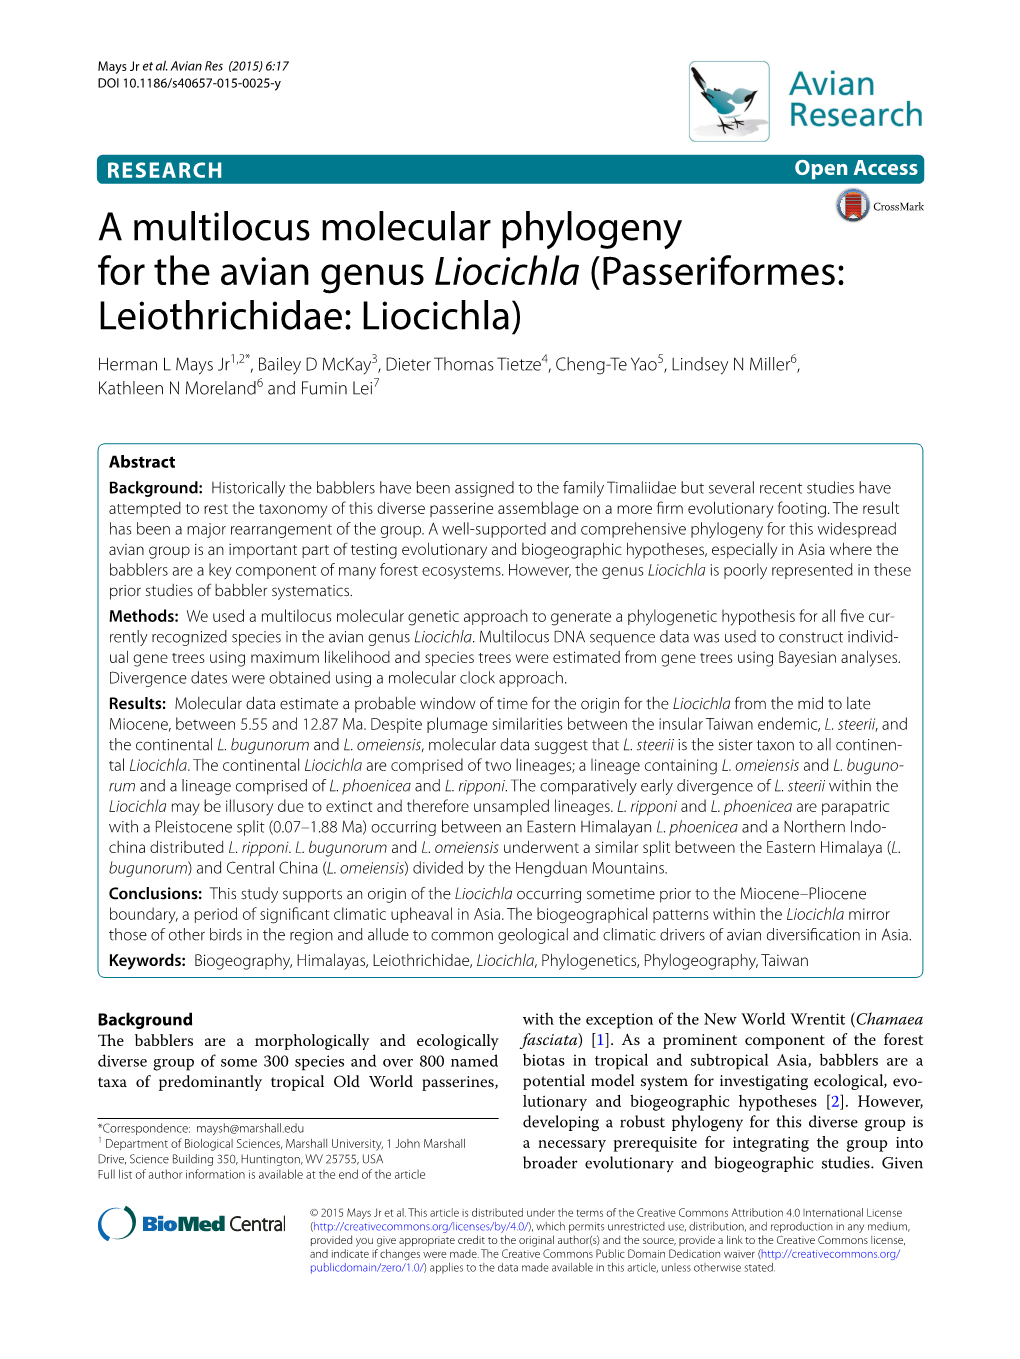 A Multilocus Molecular Phylogeny for the Avian Genus Liocichla